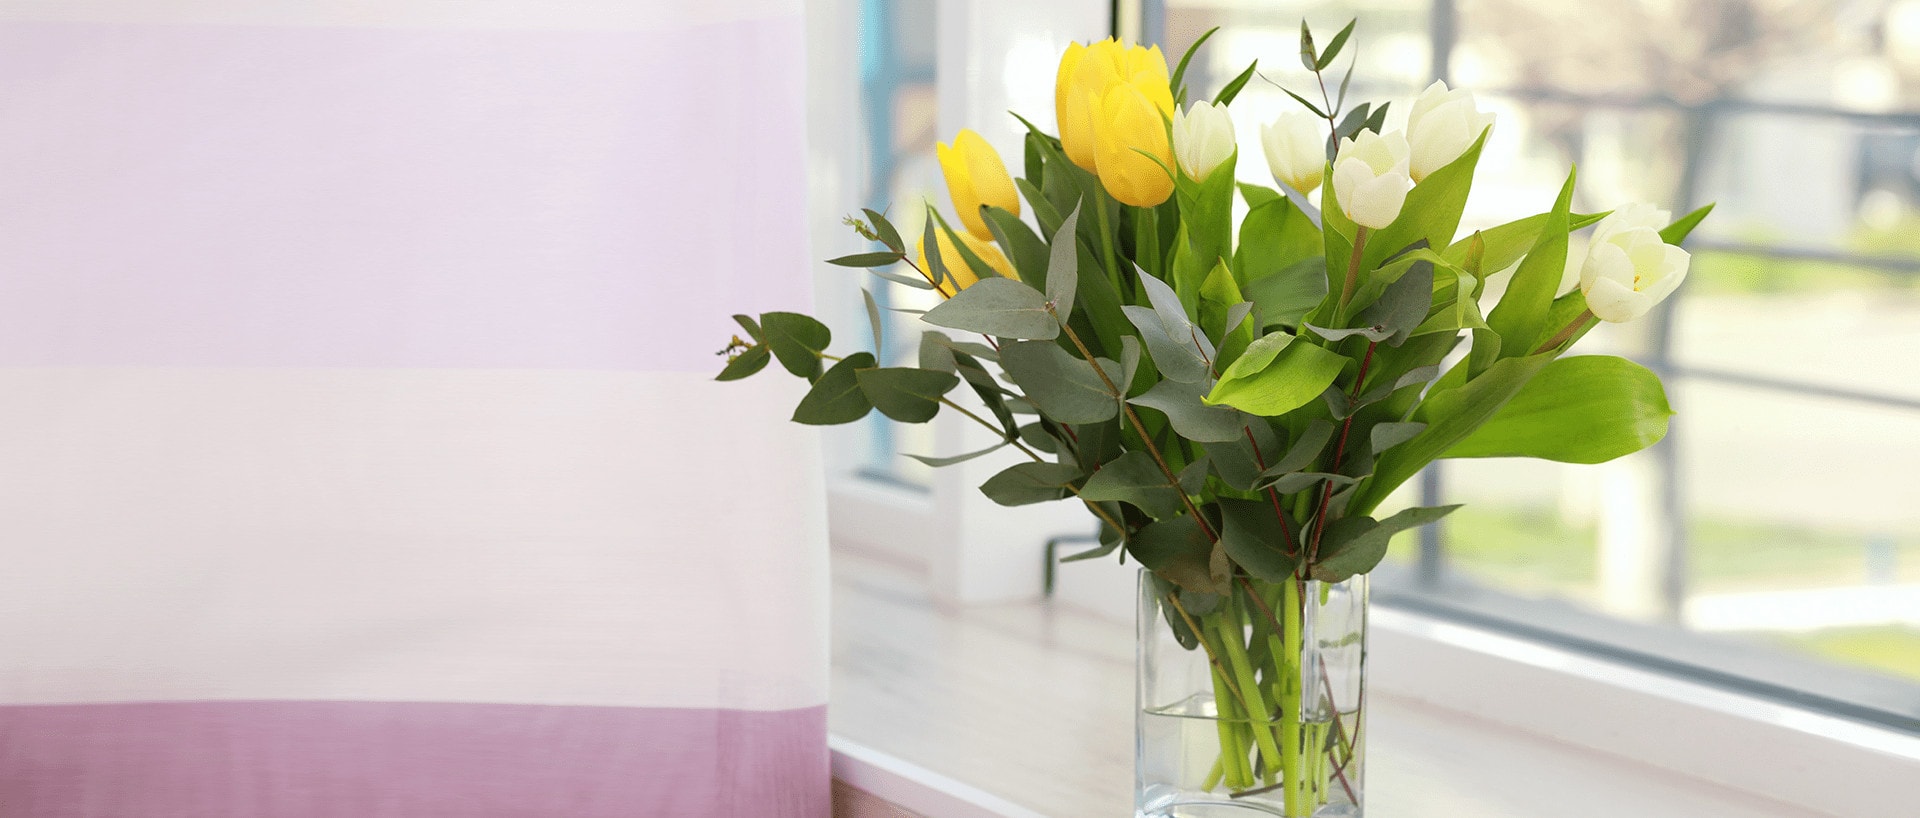 get well flowers in vase by window in hospital room